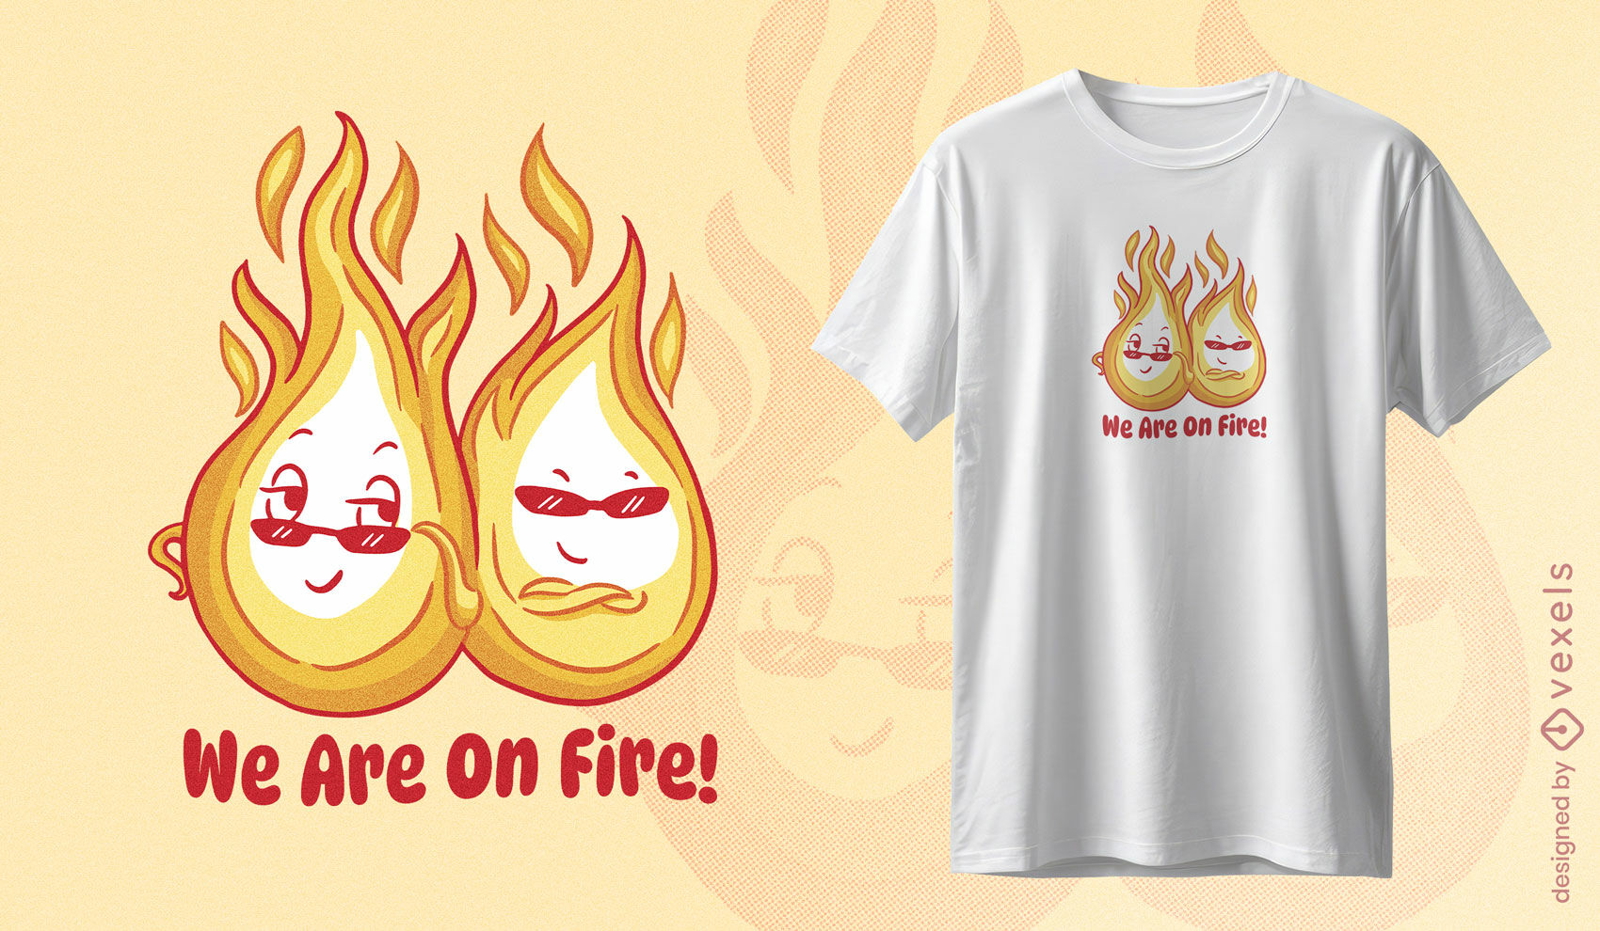 Animated flame t-shirt design